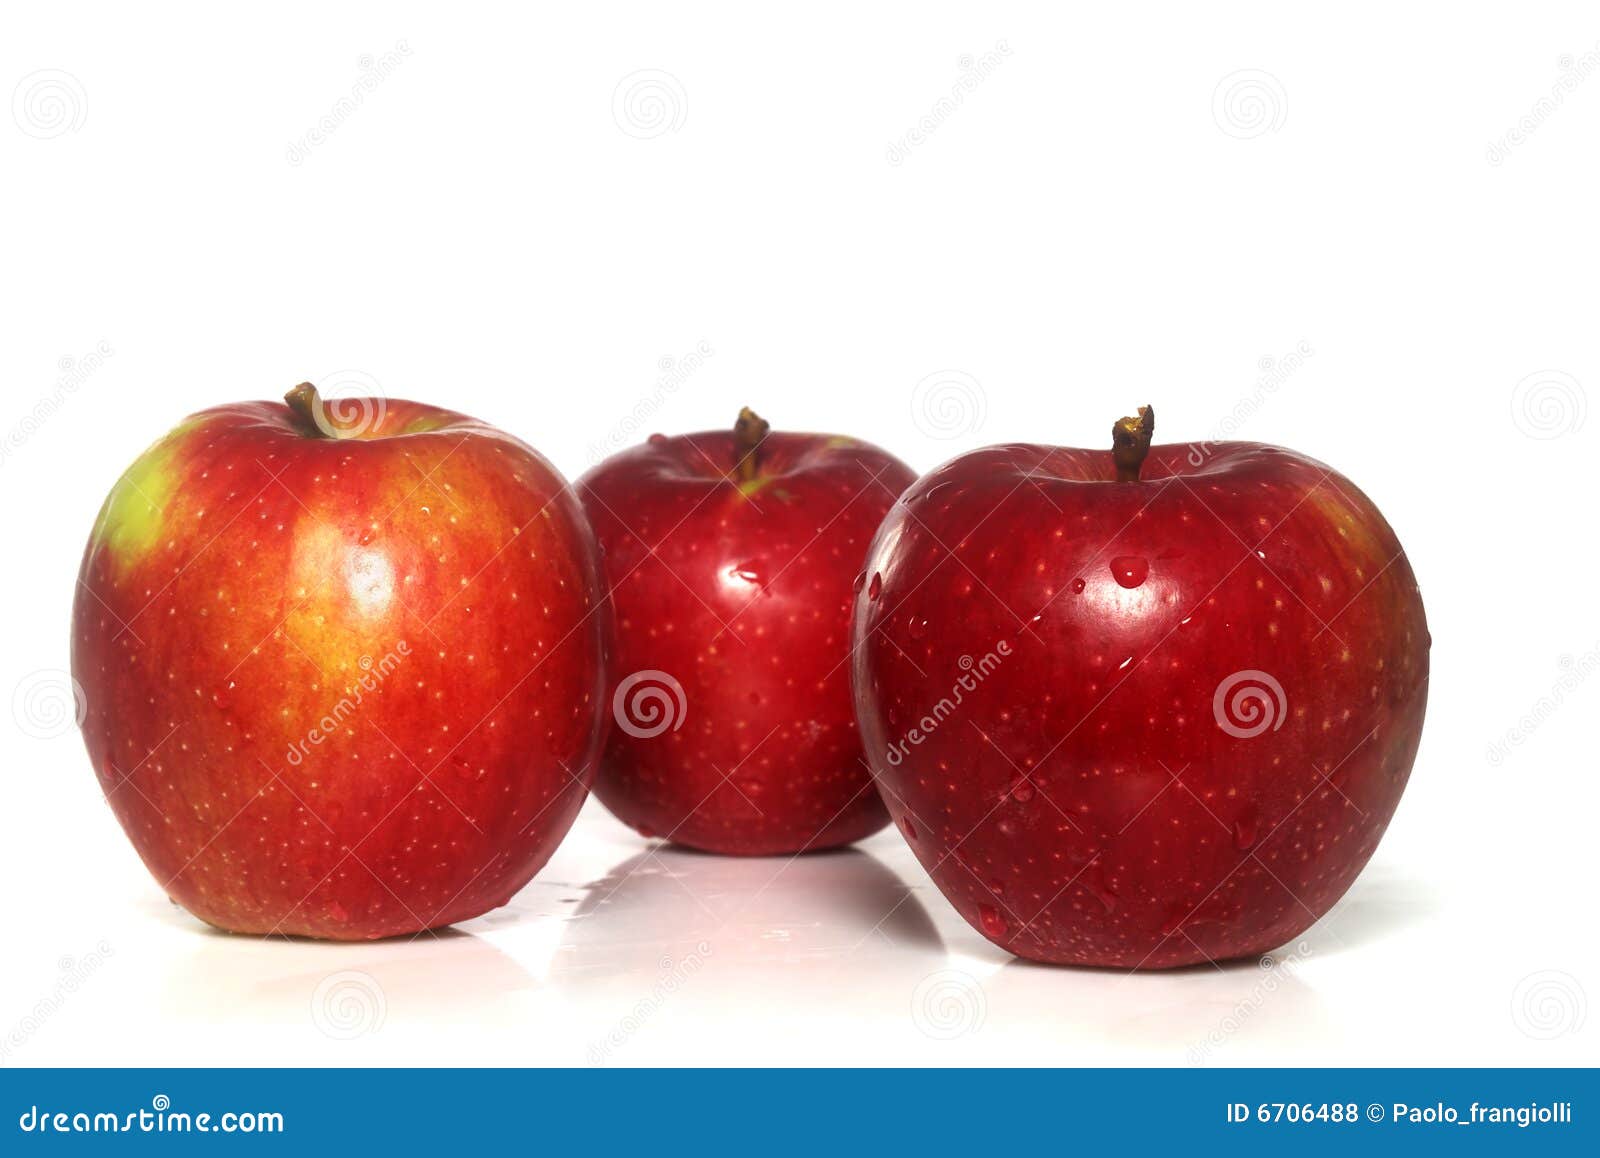 apple macintosh 